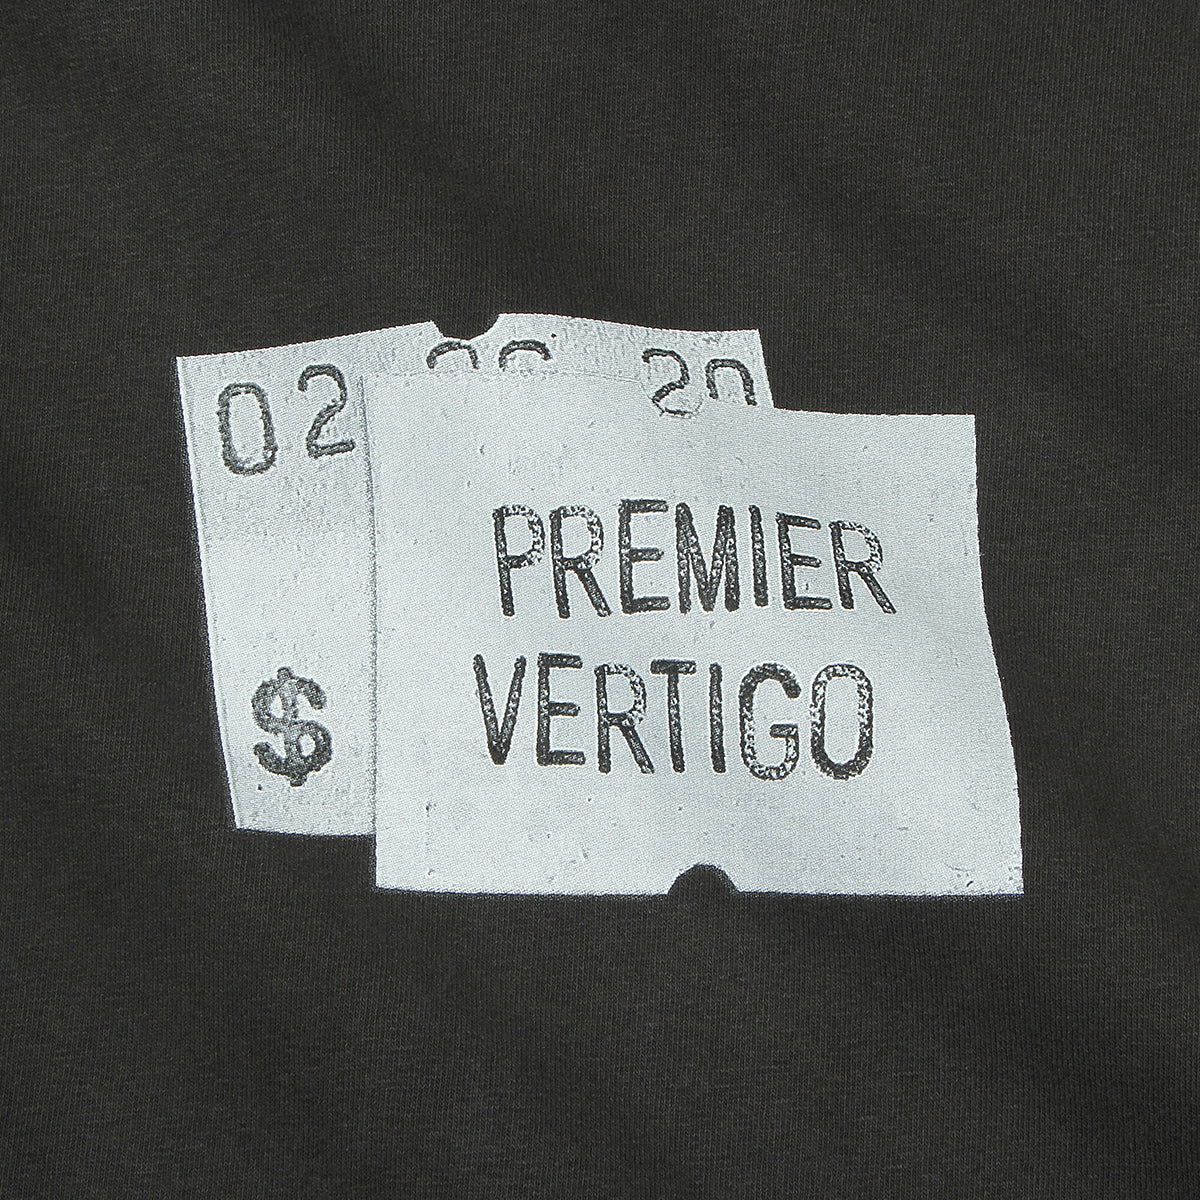 Premier x Vertigo | Tag T-Shirt Color : Vintage Black